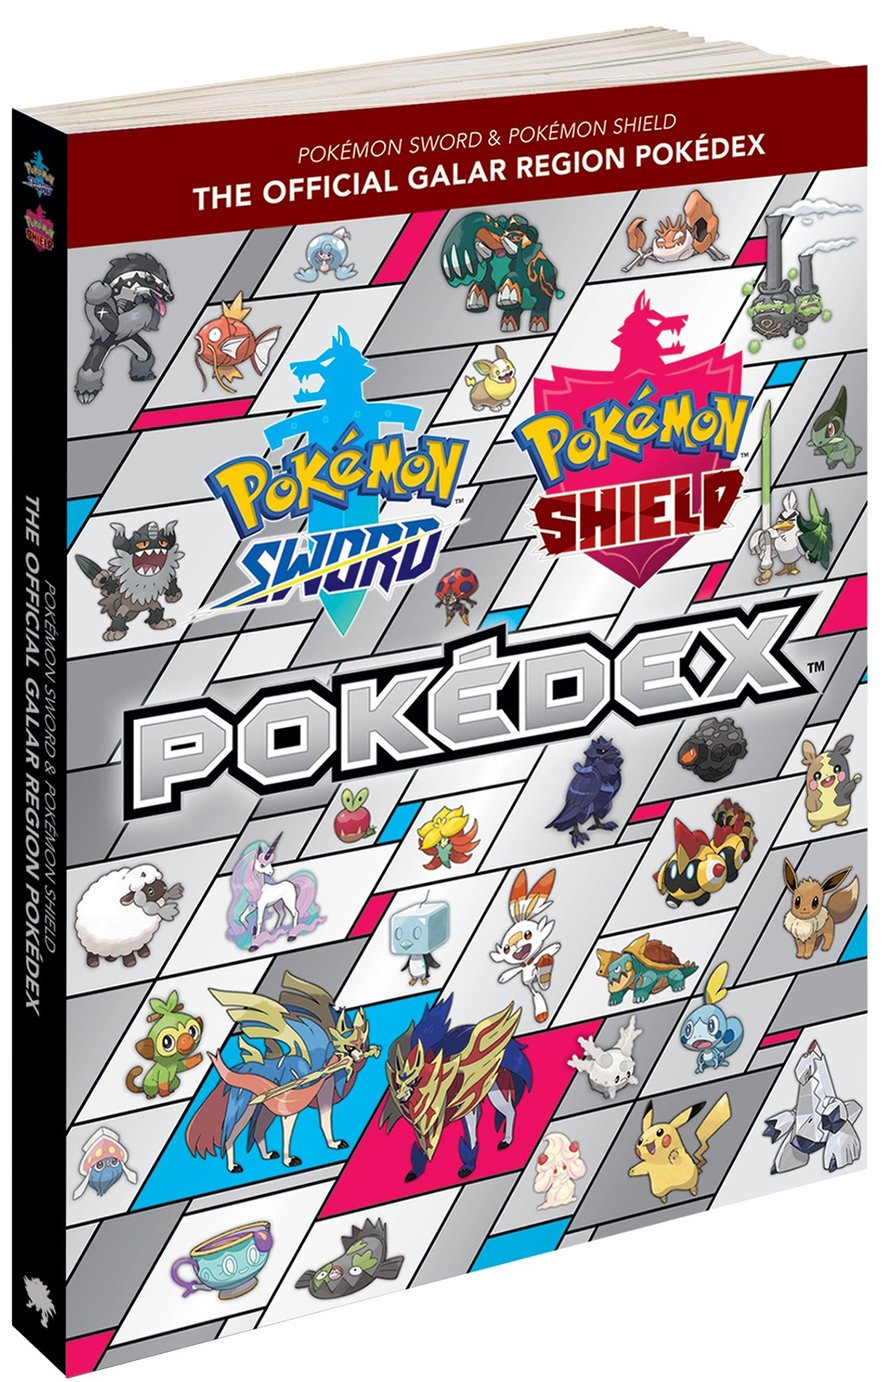 Pokemon Sword & Shield: The Official Galar Region Pokedex Review